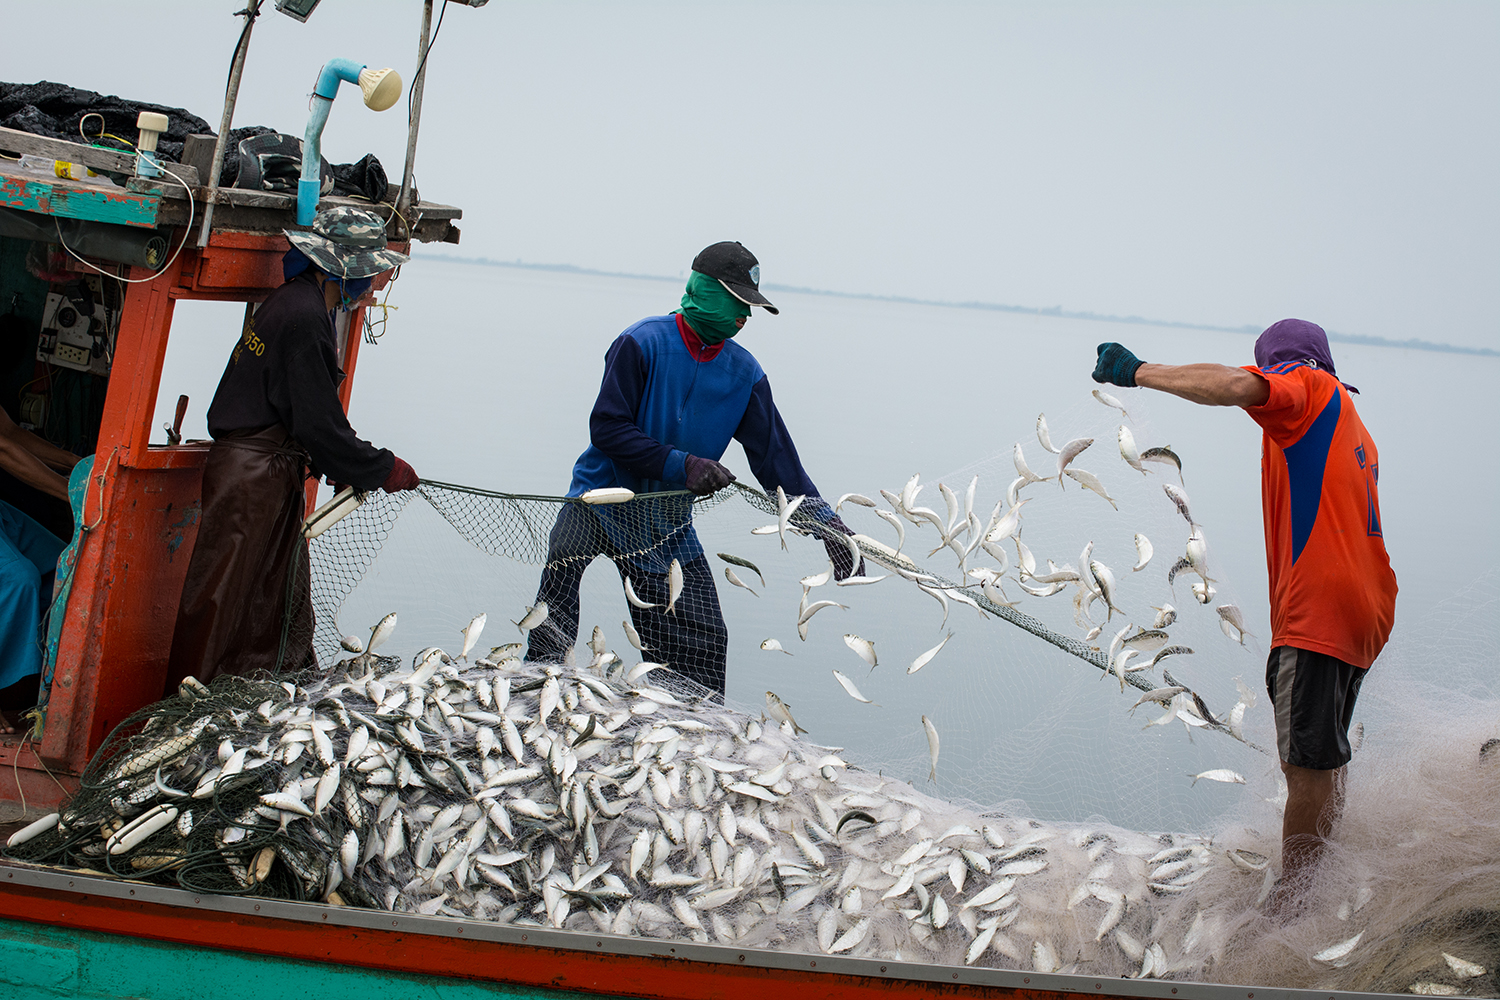 IFFO, GAA urge Asian trawl fisheries to improve stocks, product